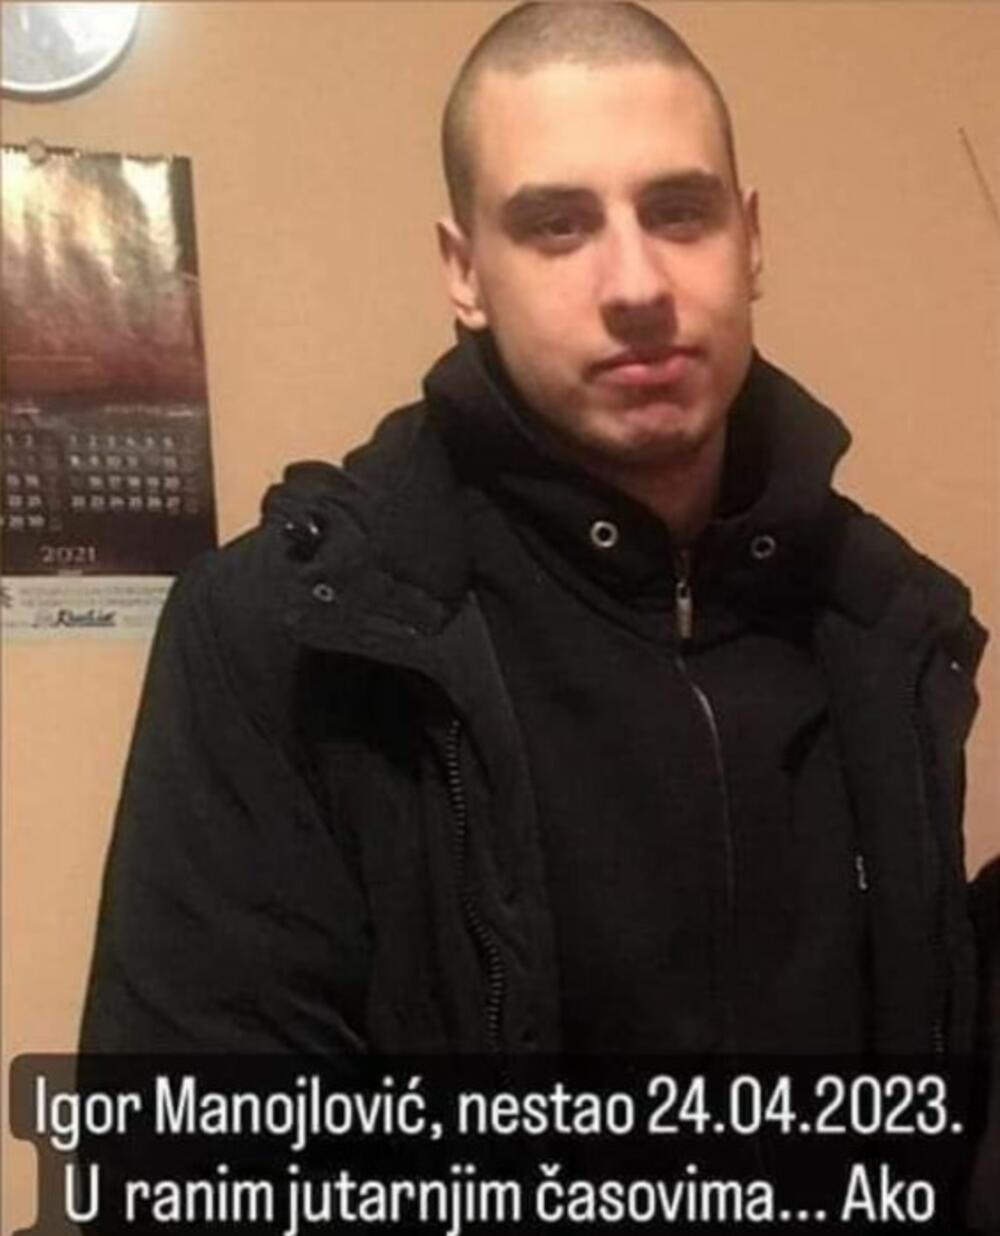 Igor Manojlović